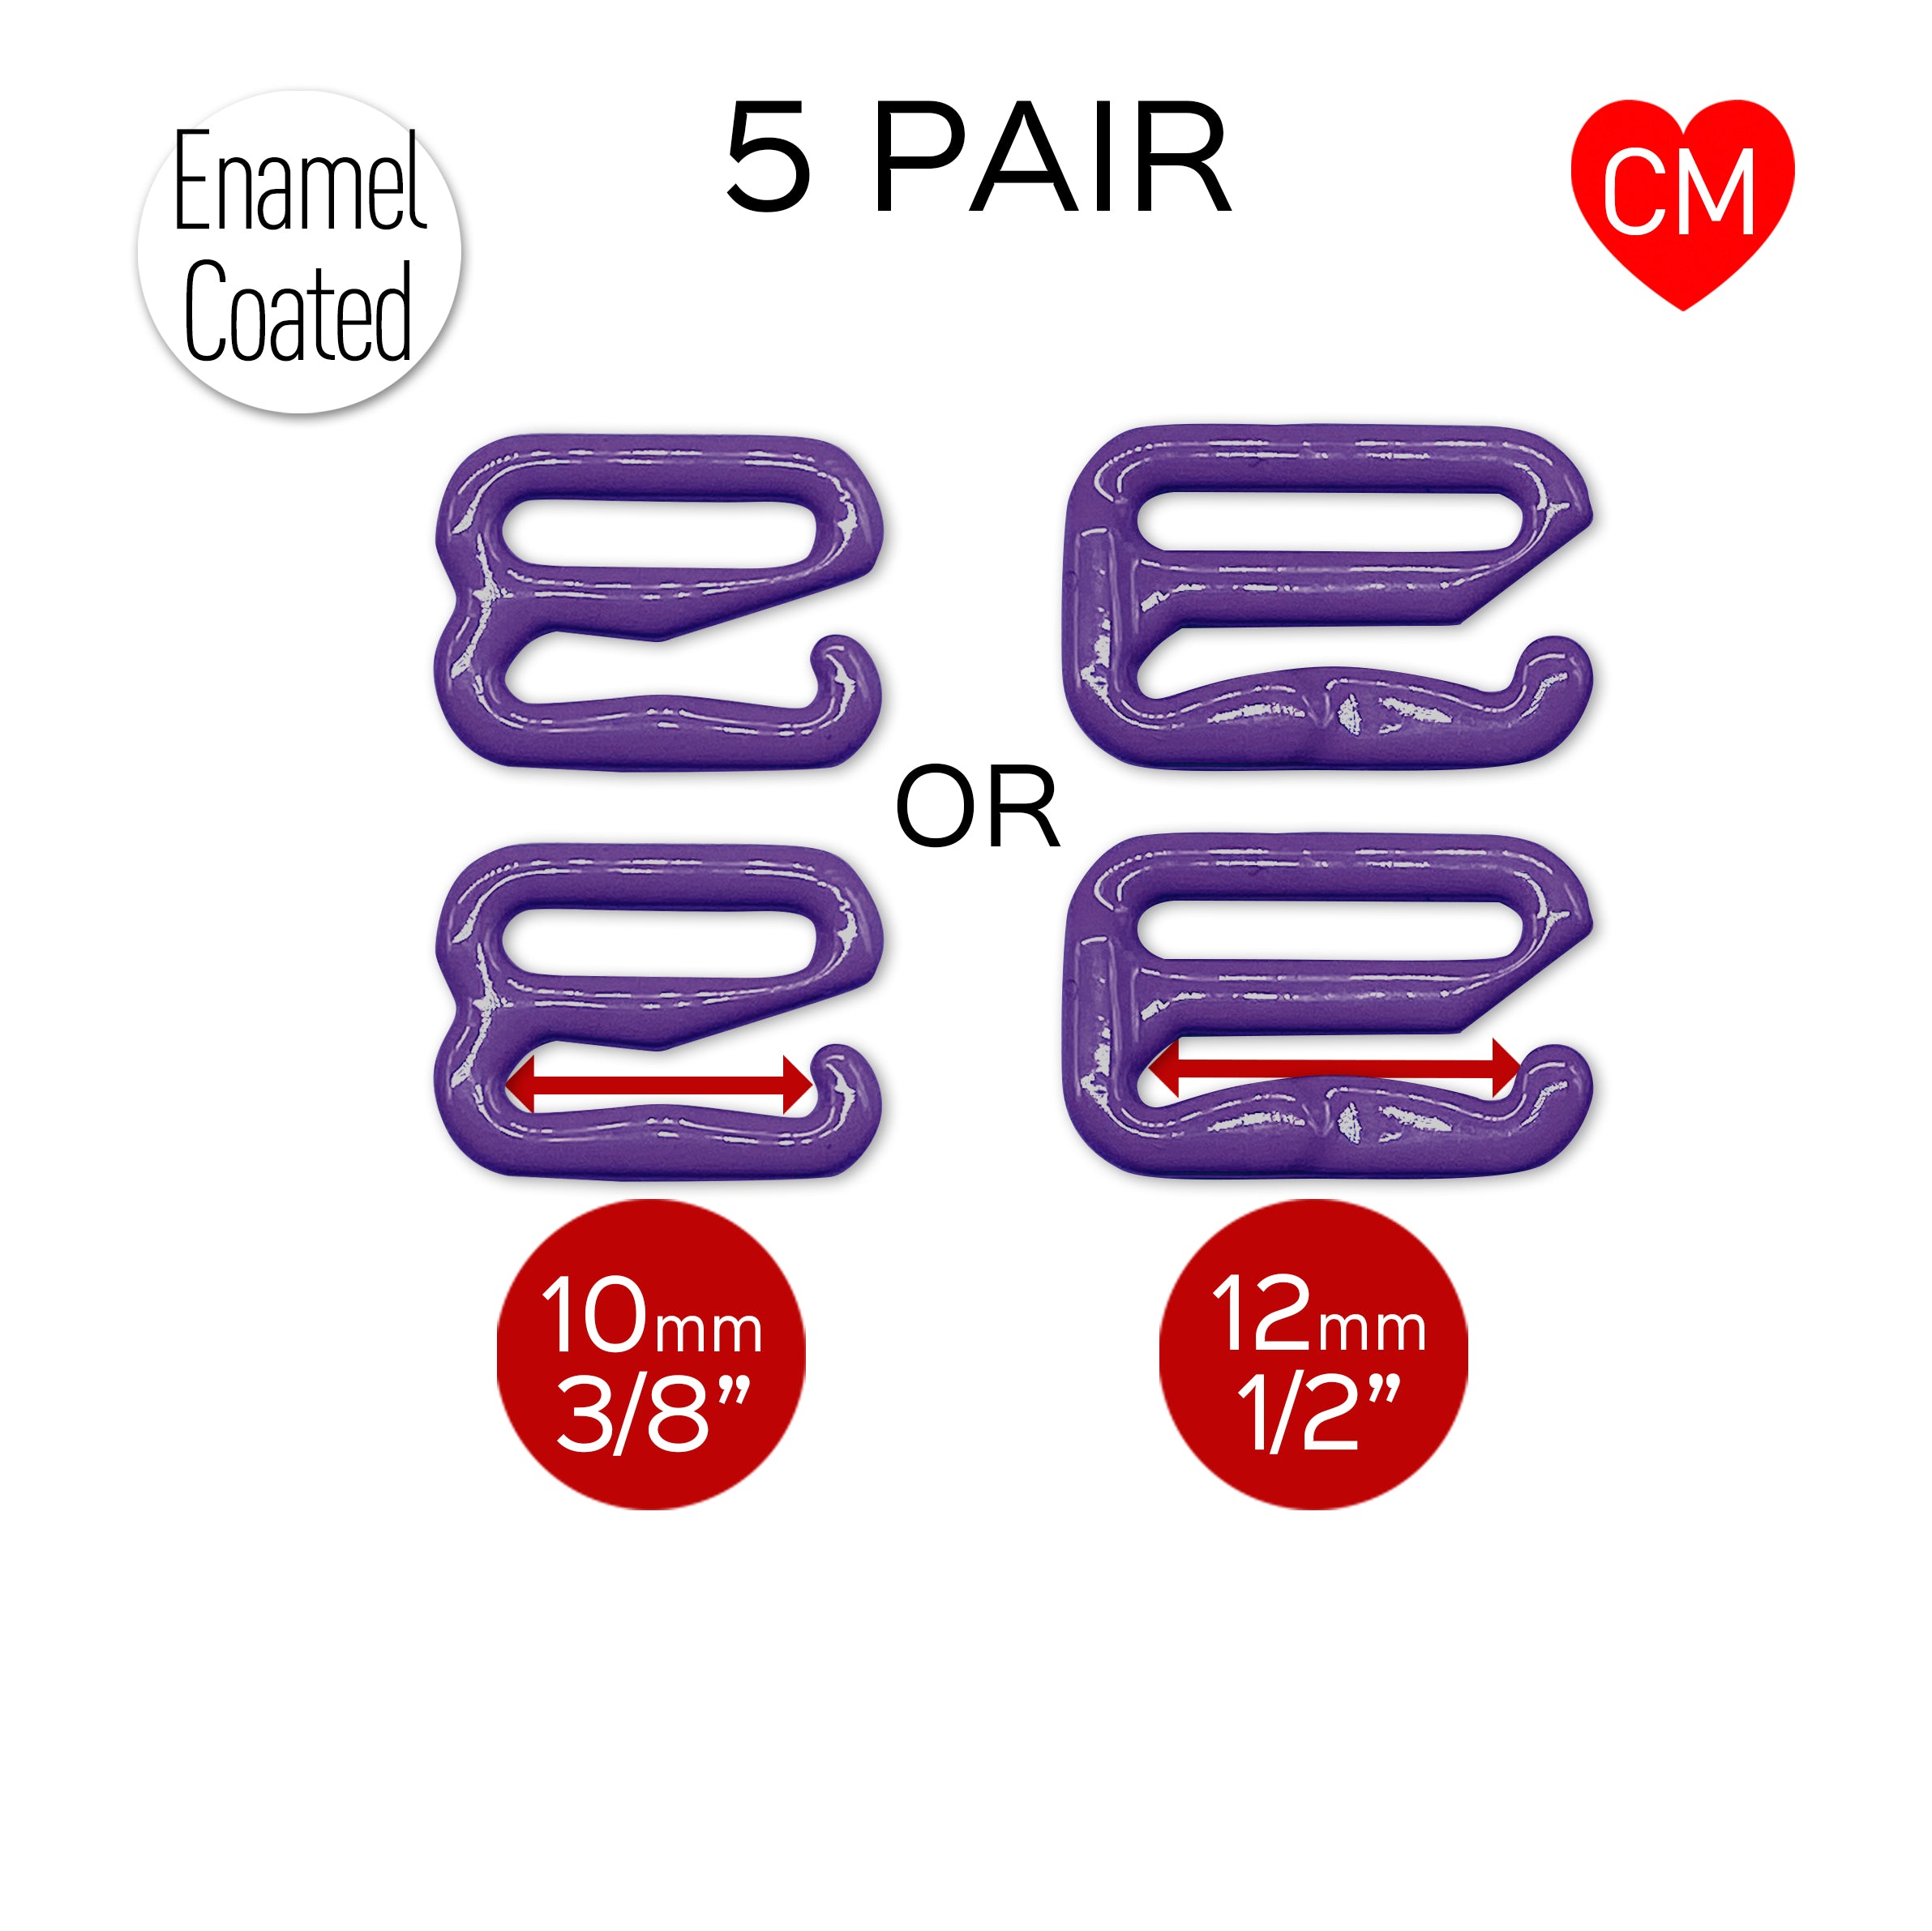 CLEARANCE- 5 Pair of Bra Strap Slider G Hooks in Enamel Coated Jewel Purple for Swimwear or Bra making- 3/8" or 1/2" - Stitch Love Studio